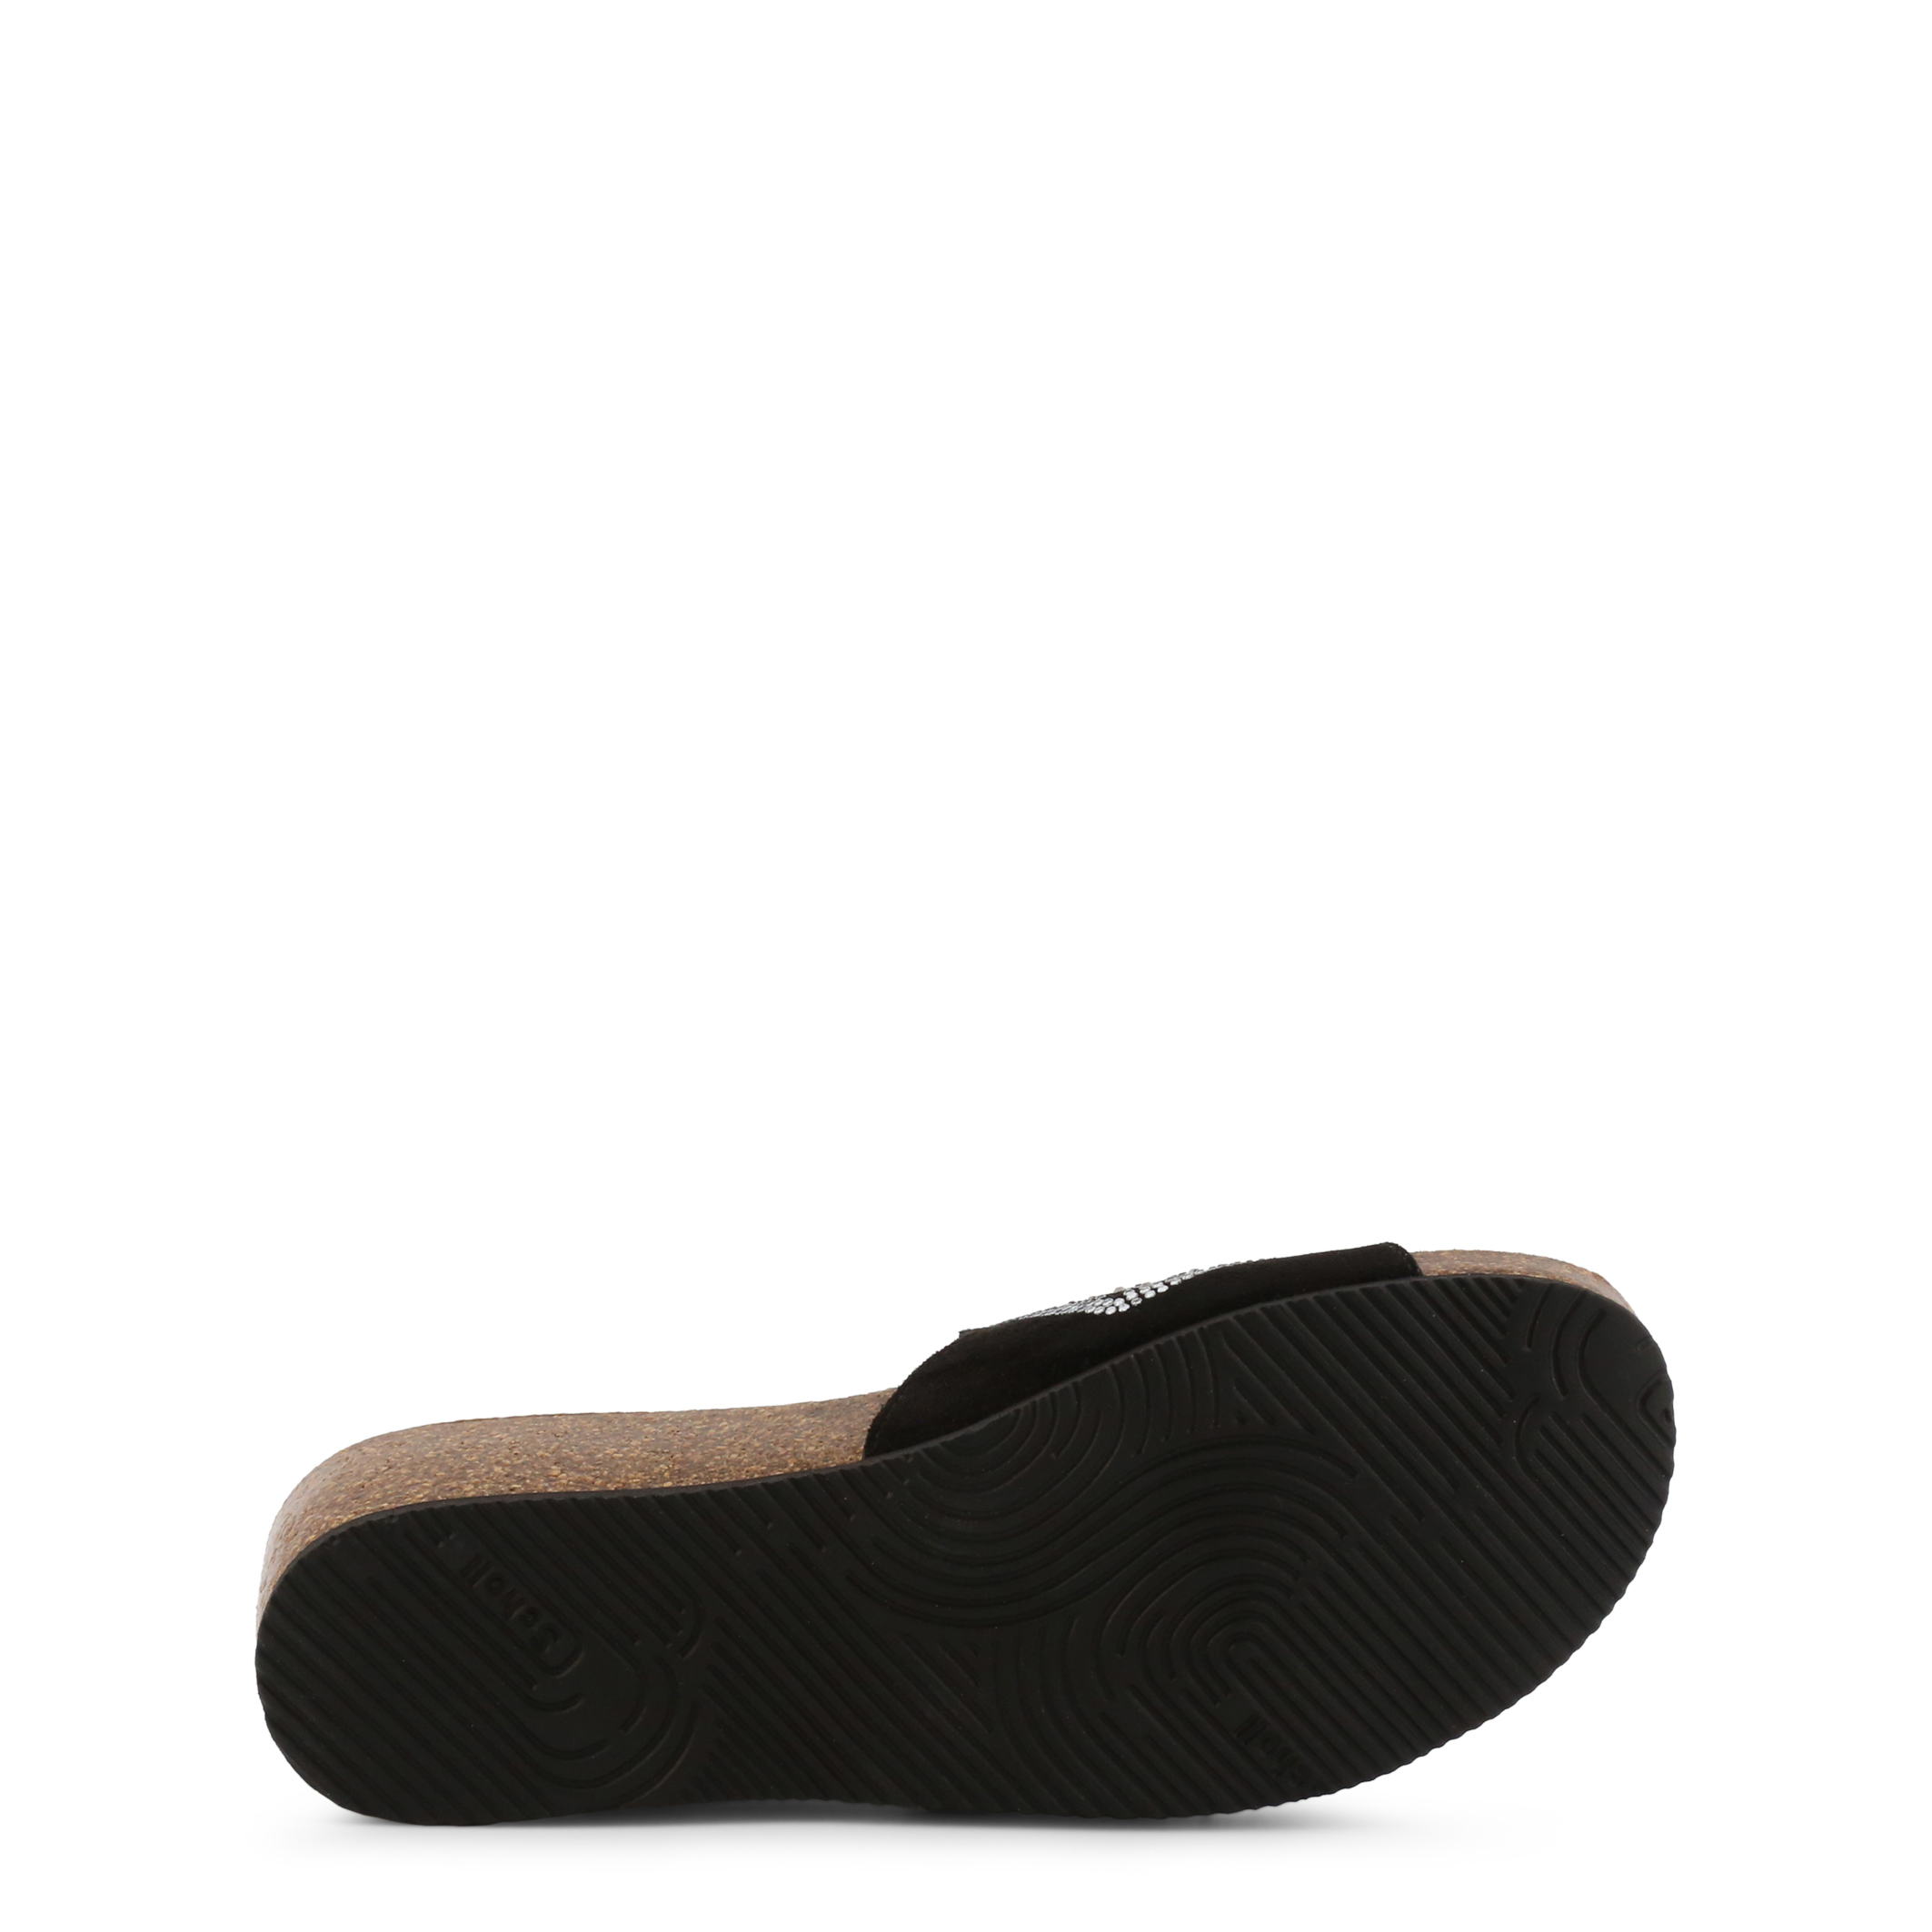 Dr Scholl Black Flip Flops for Women - CAMILLA-F27824